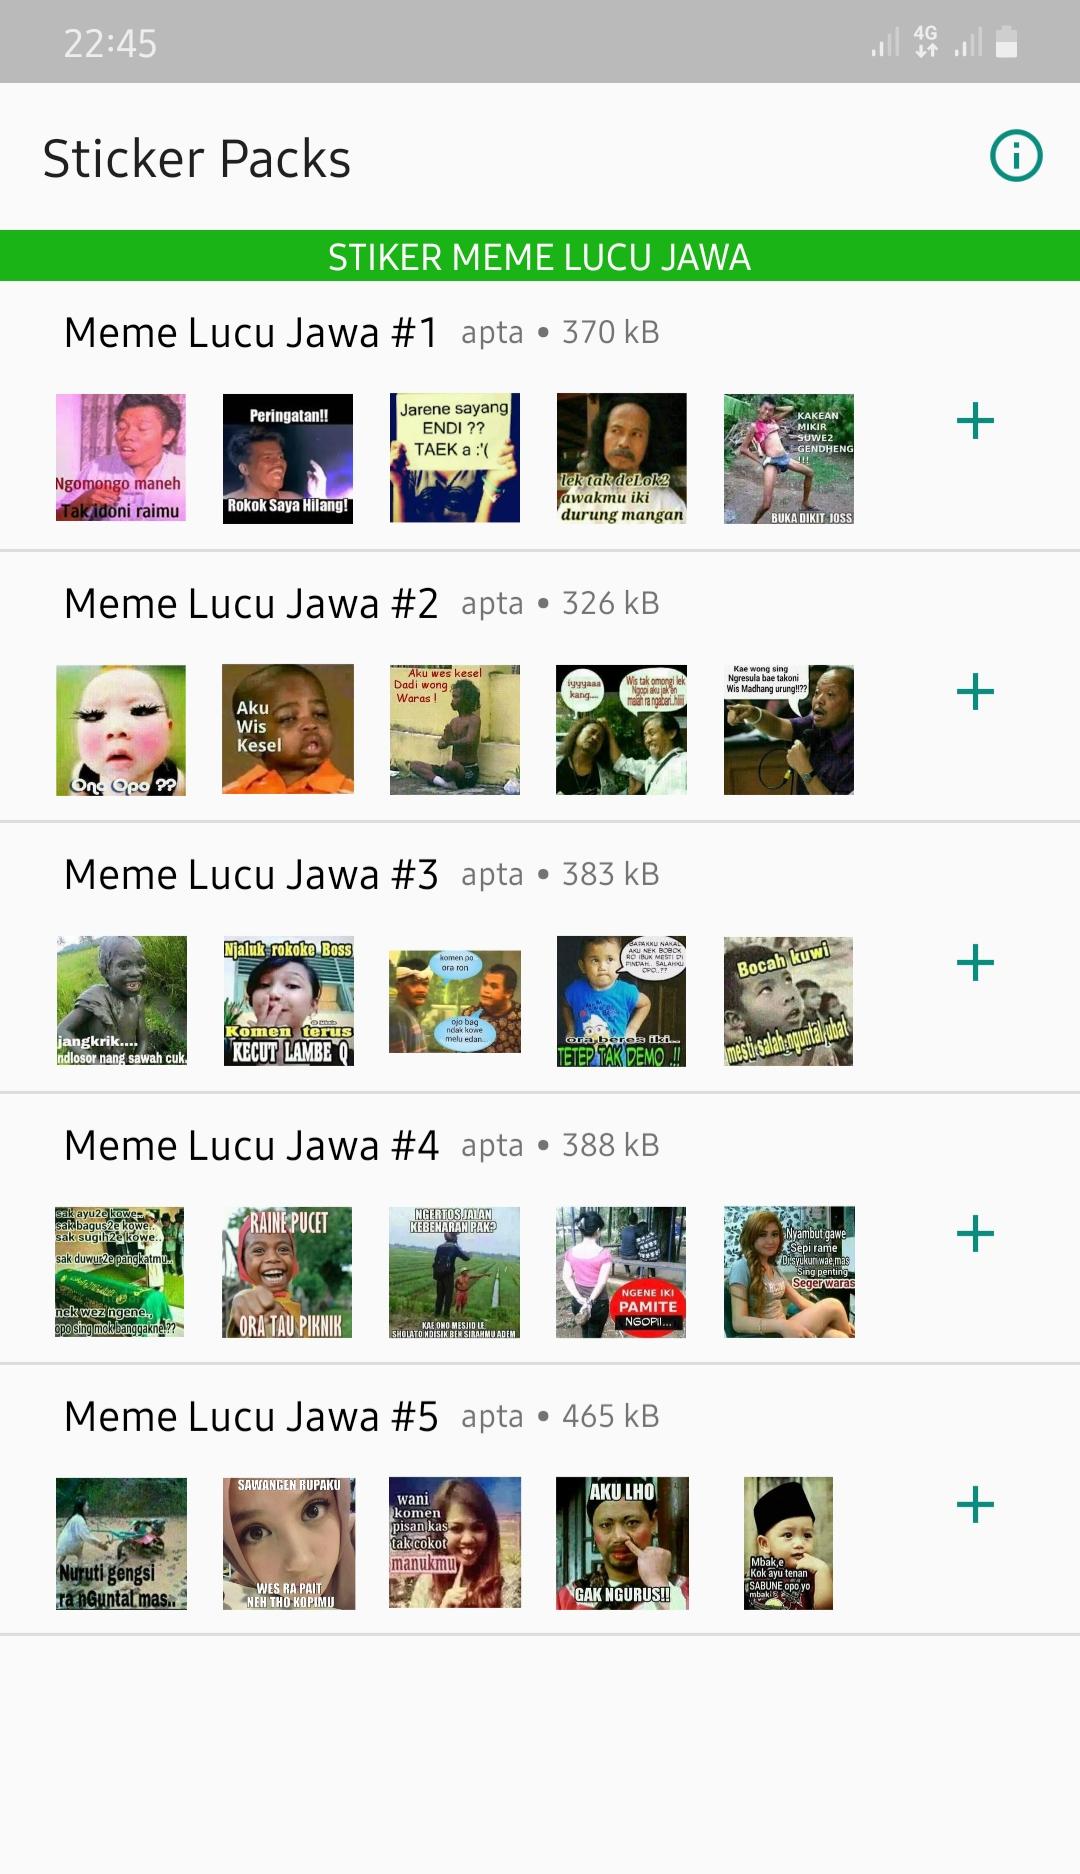 Stiker Meme Lucu Jawa For Android Apk Download